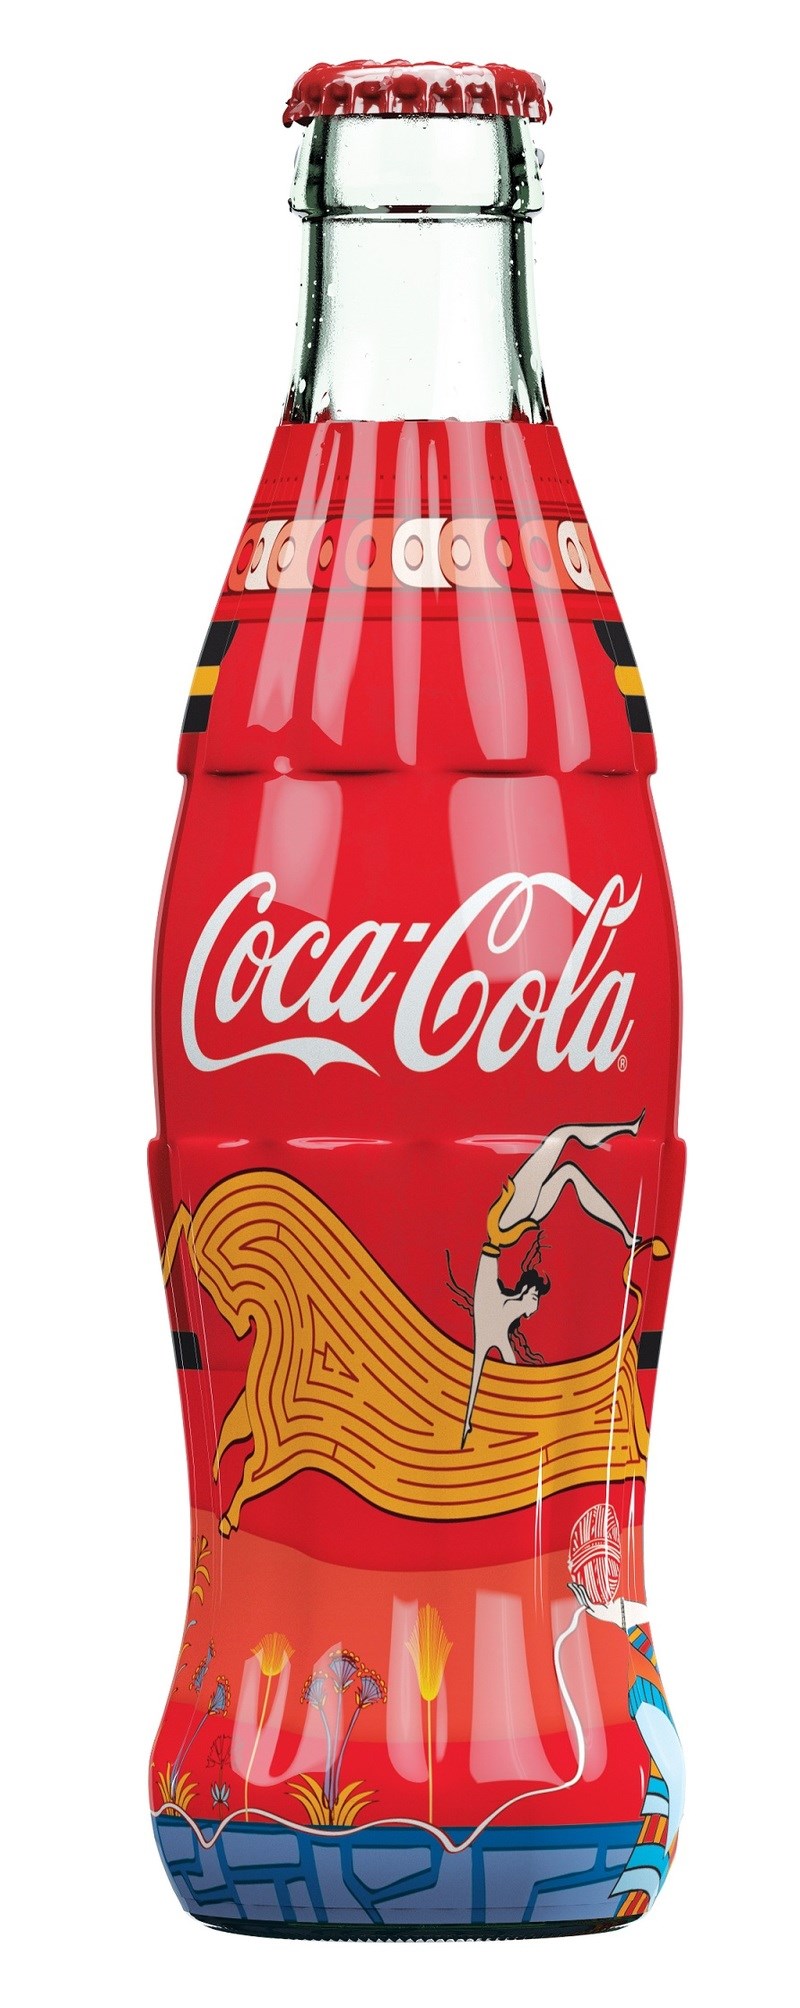 Coca Cola και Κρήτη: Μία σχέση με ιστορία και ξεχωριστή γεύση γιορτάζει με απίθανα happenings